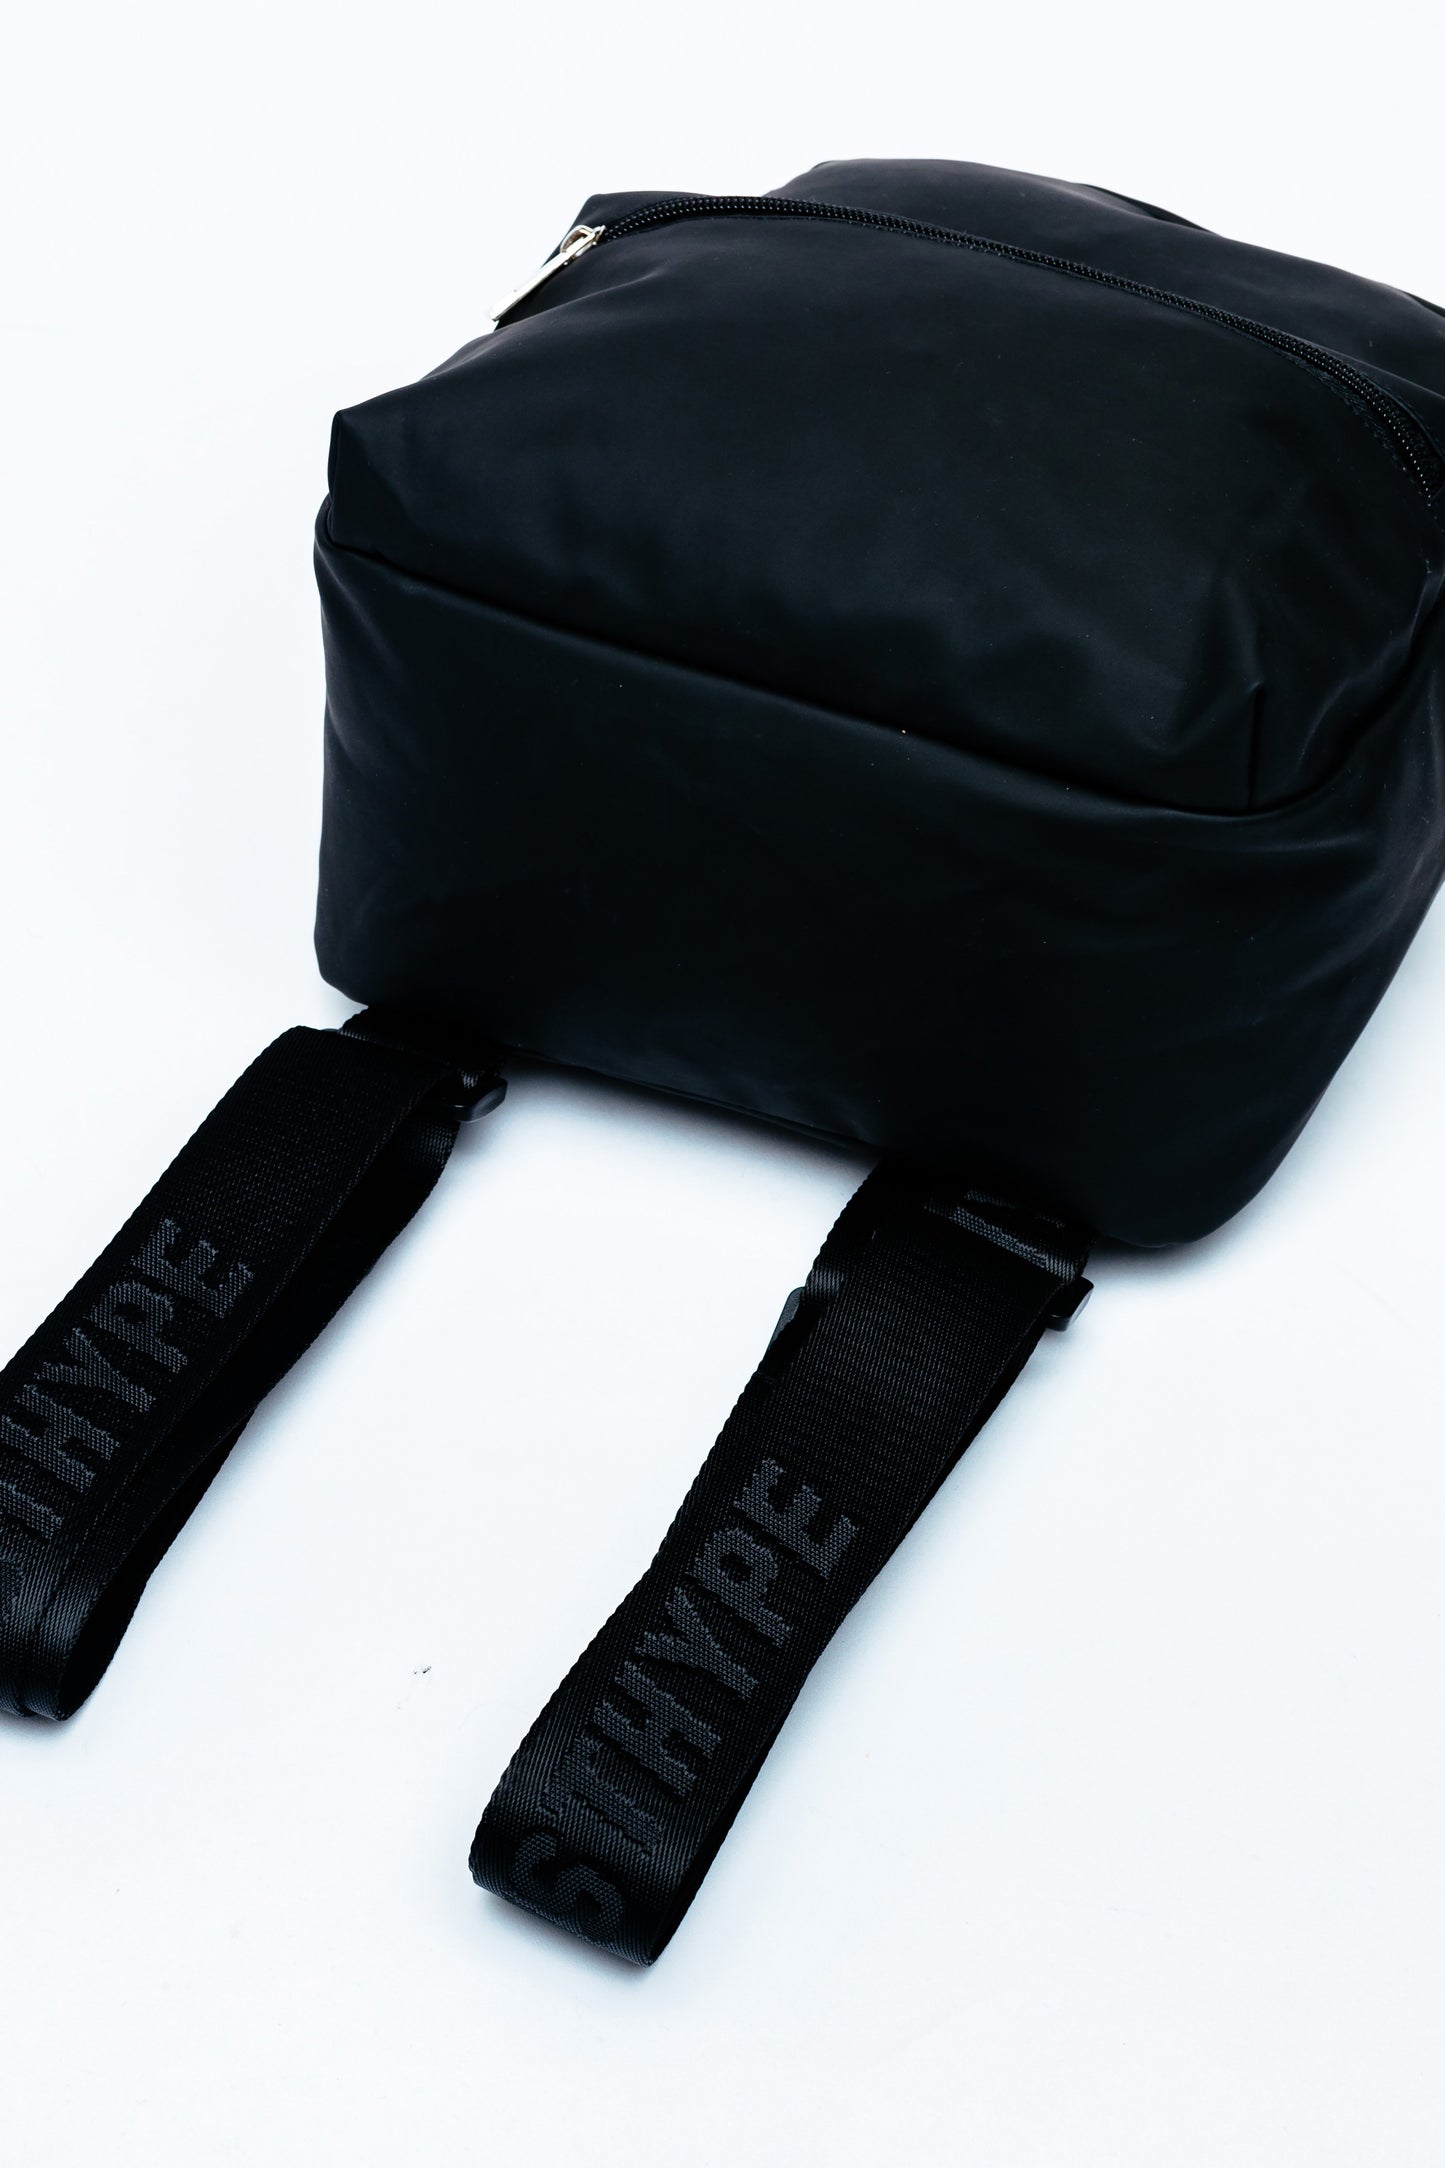 Hype Black Alexa Backpack